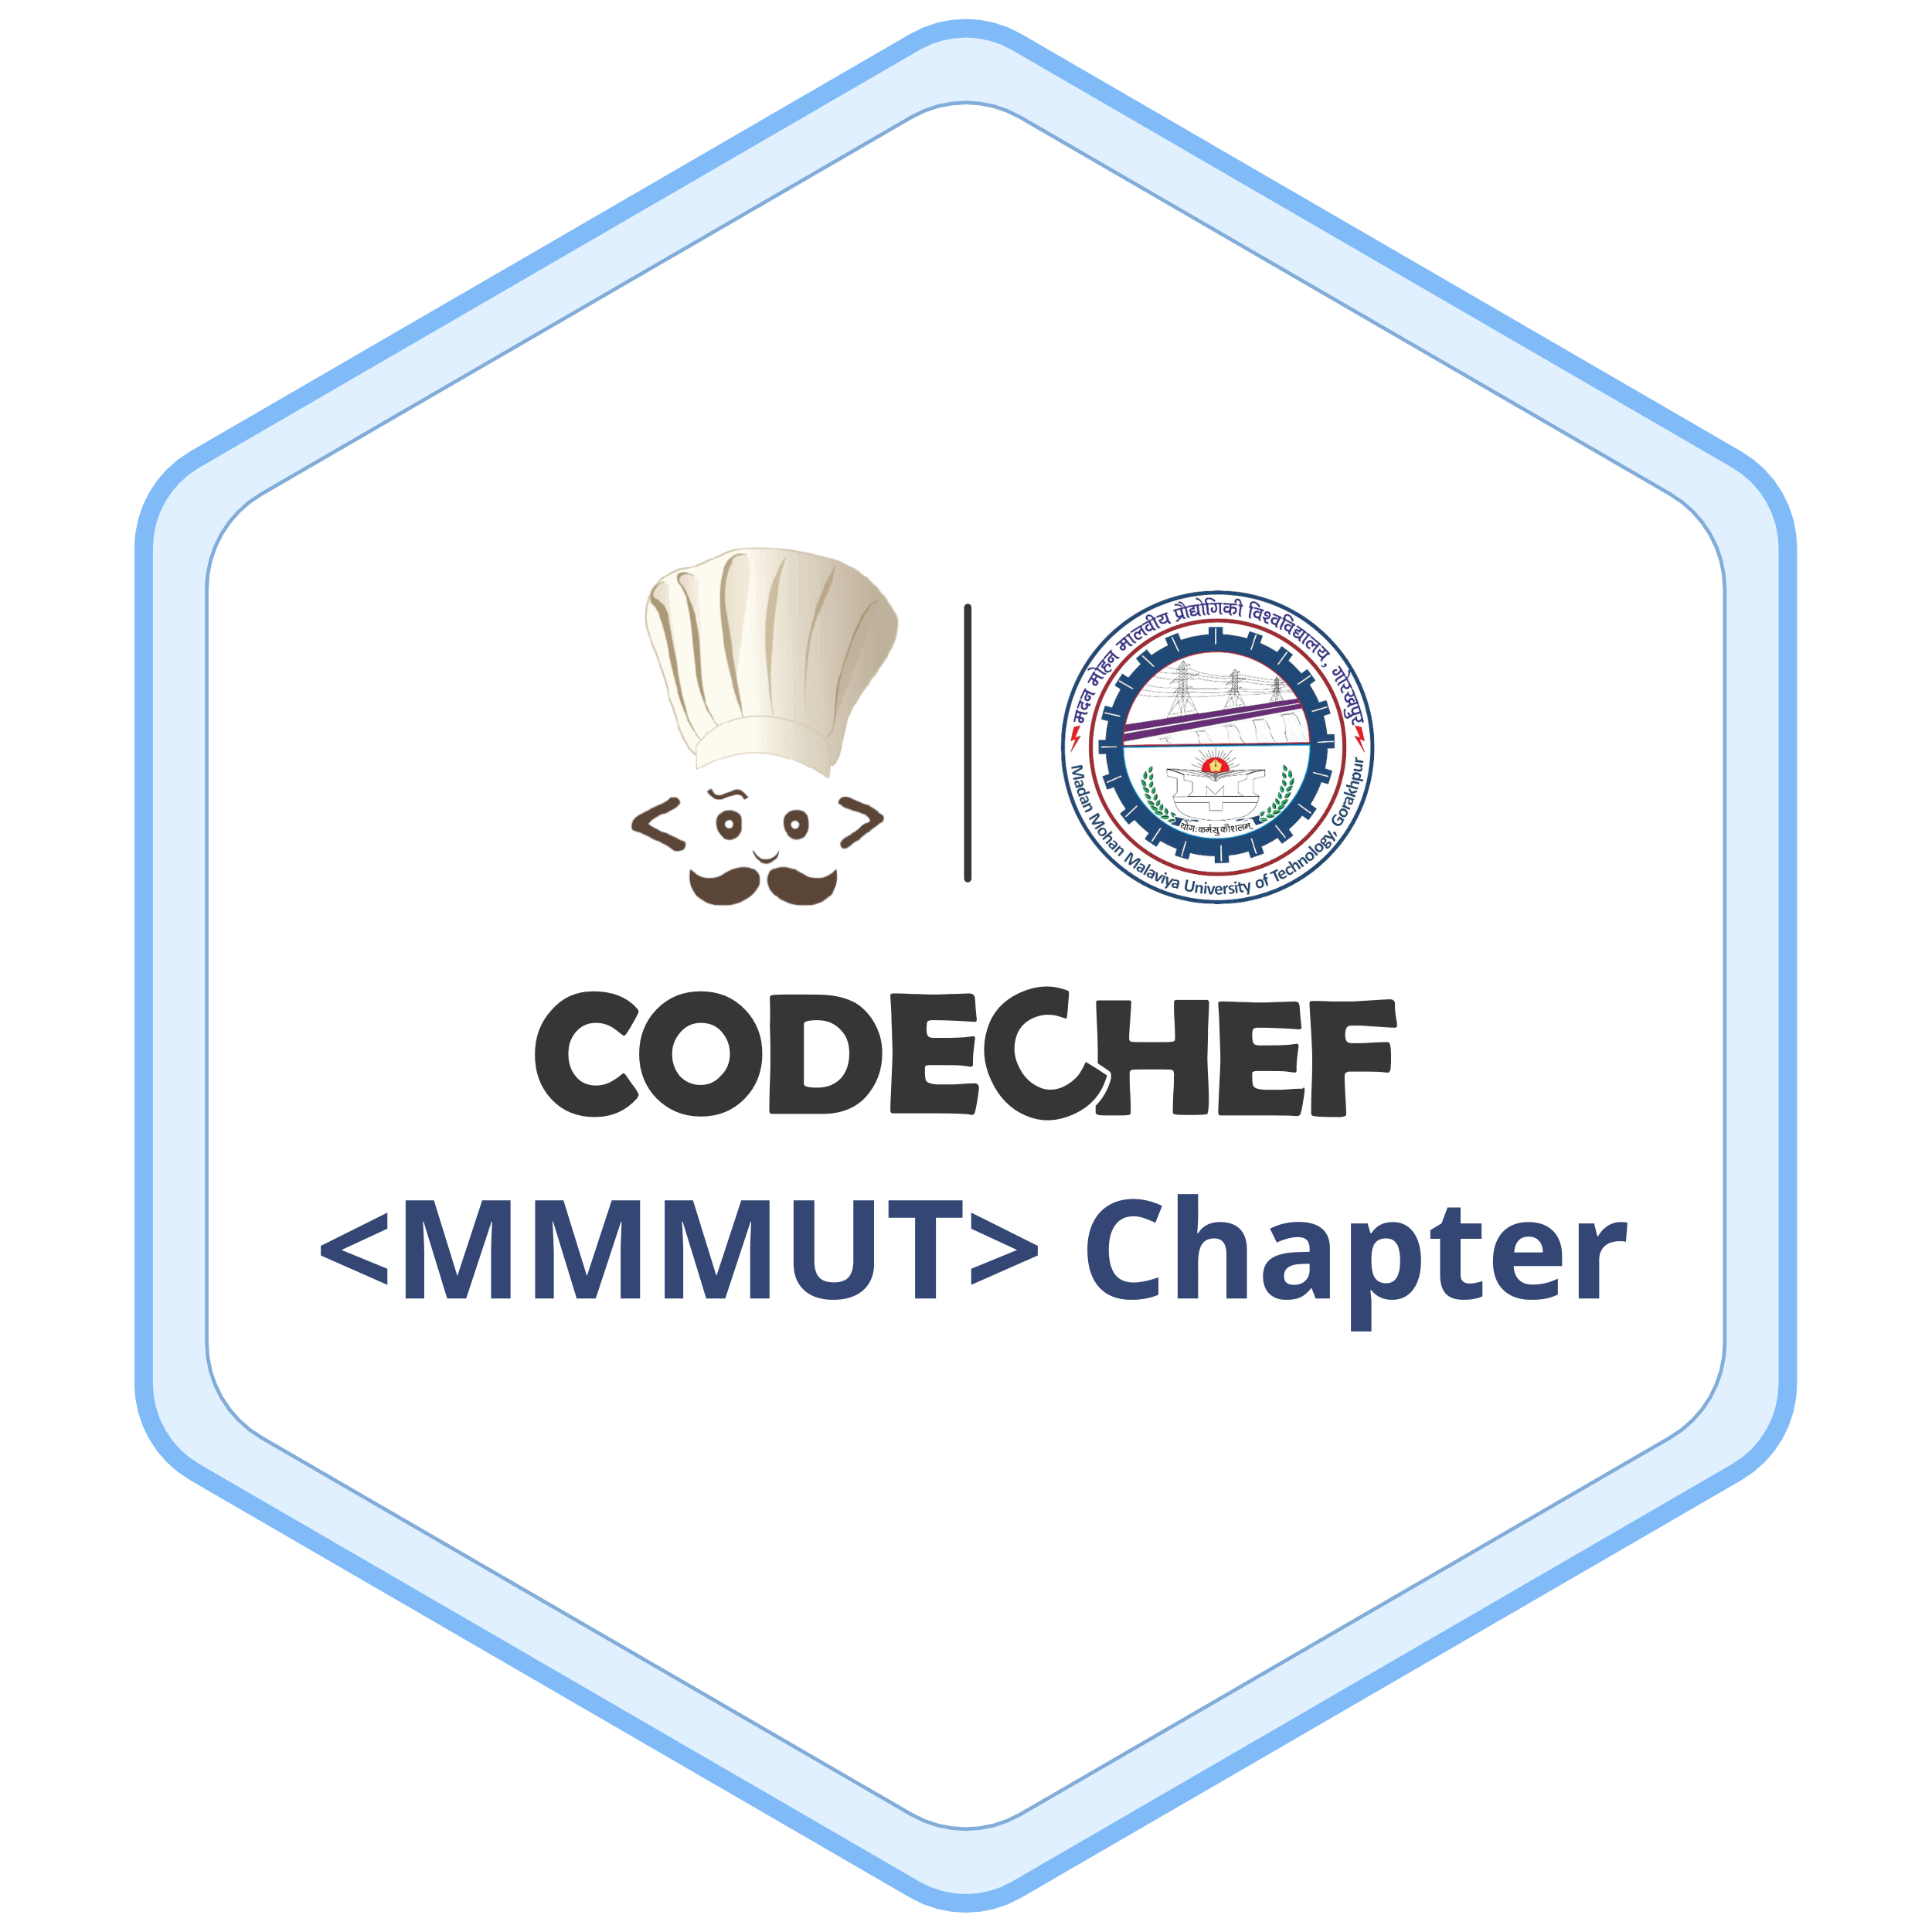 cc-chapter-logo